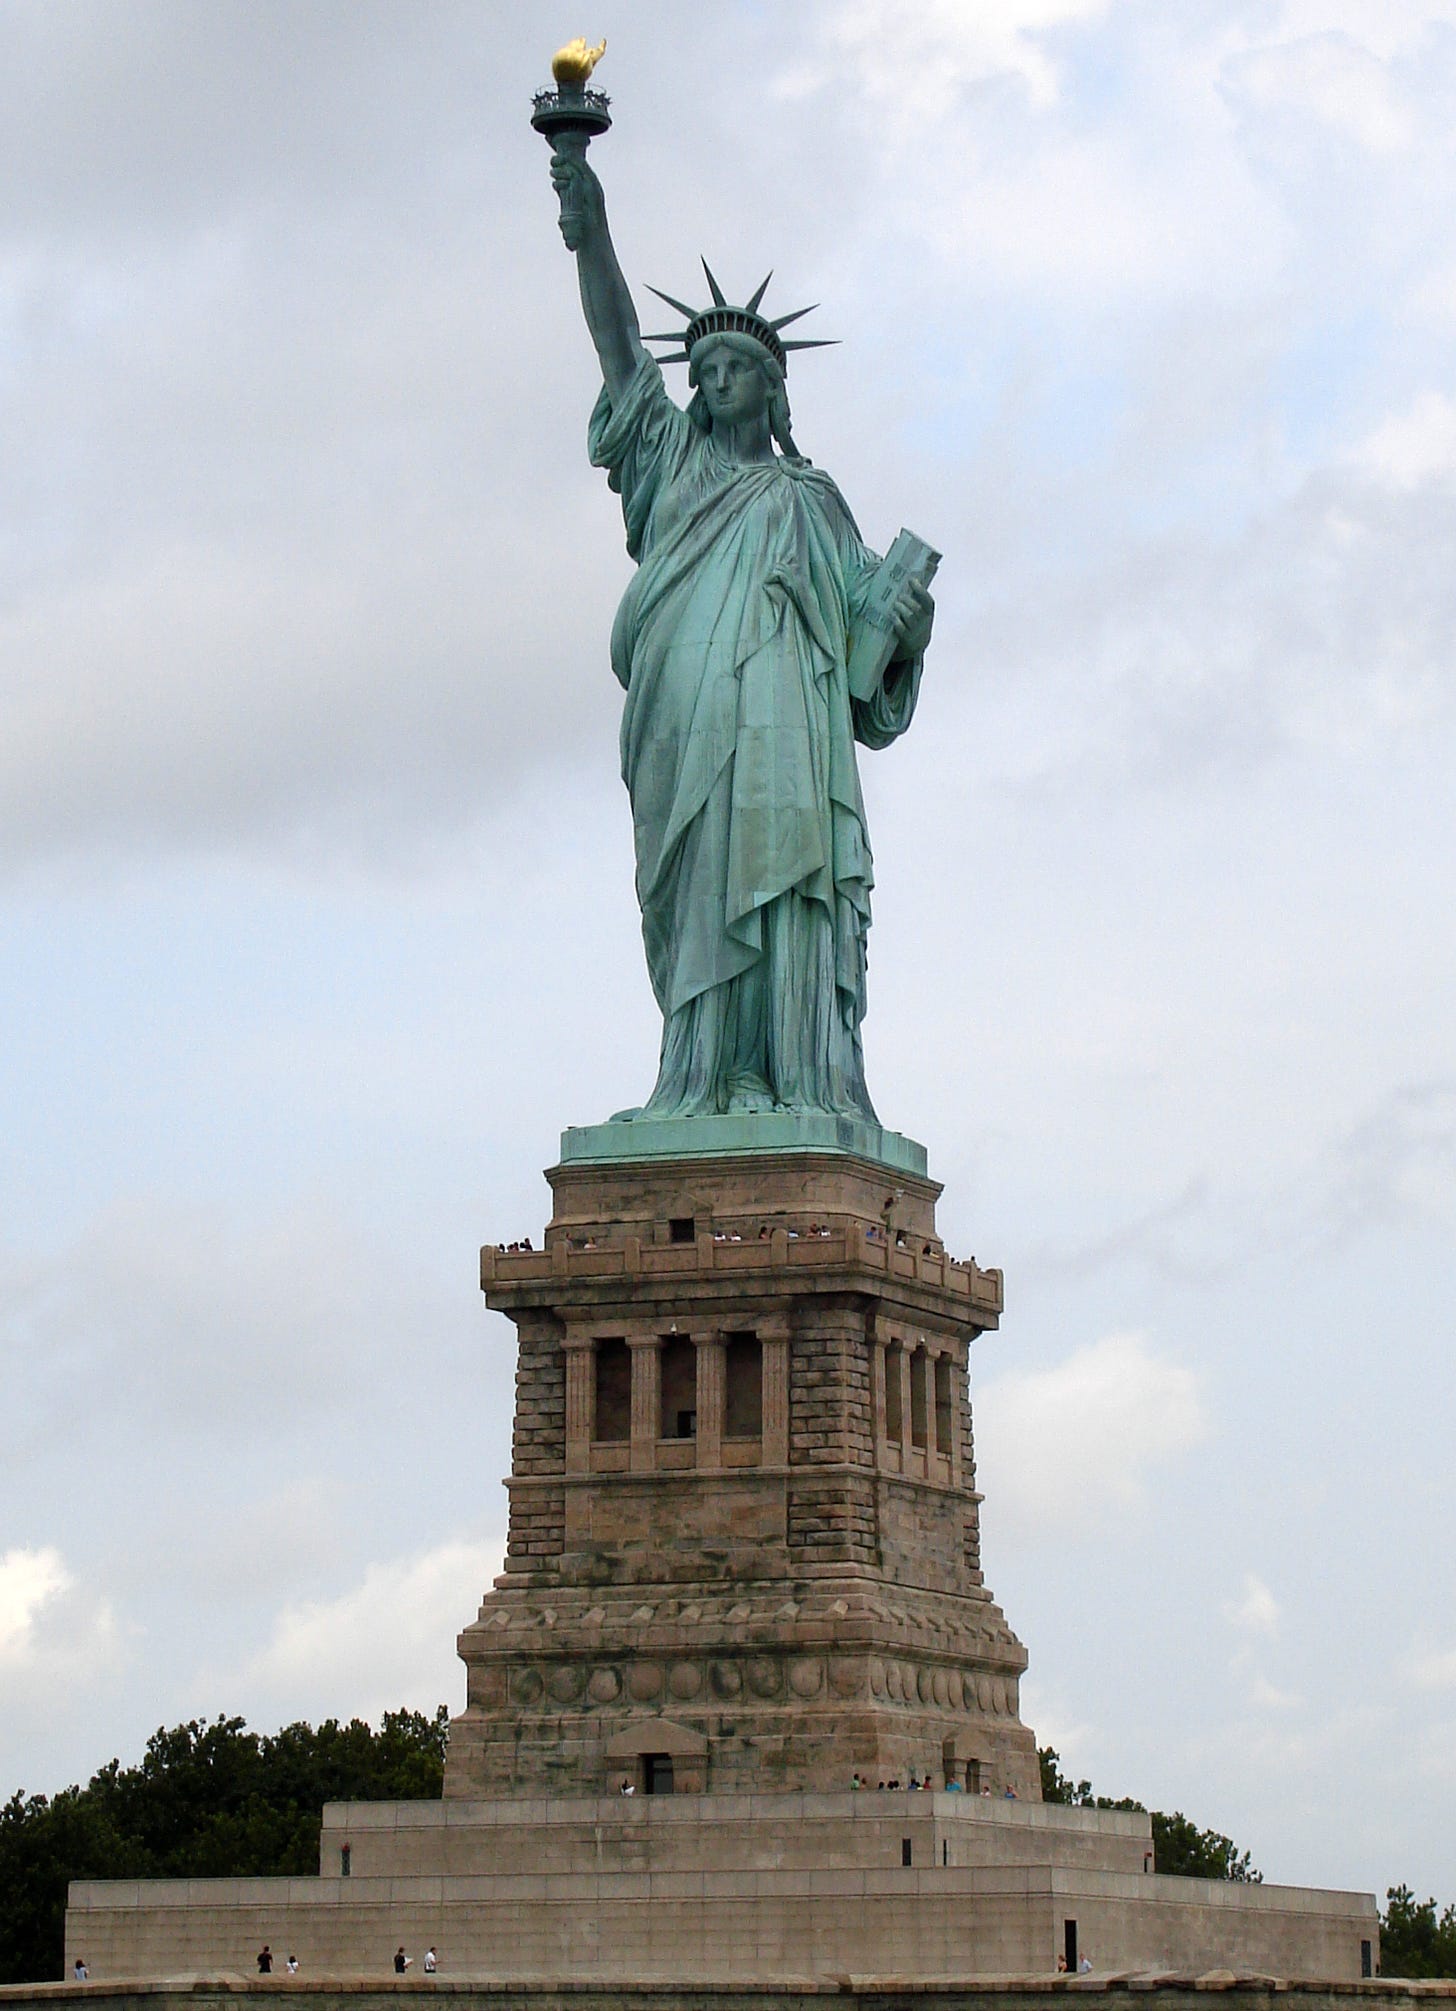 https://upload.wikimedia.org/wikipedia/commons/a/a1/Statue_of_Liberty_7.jpg